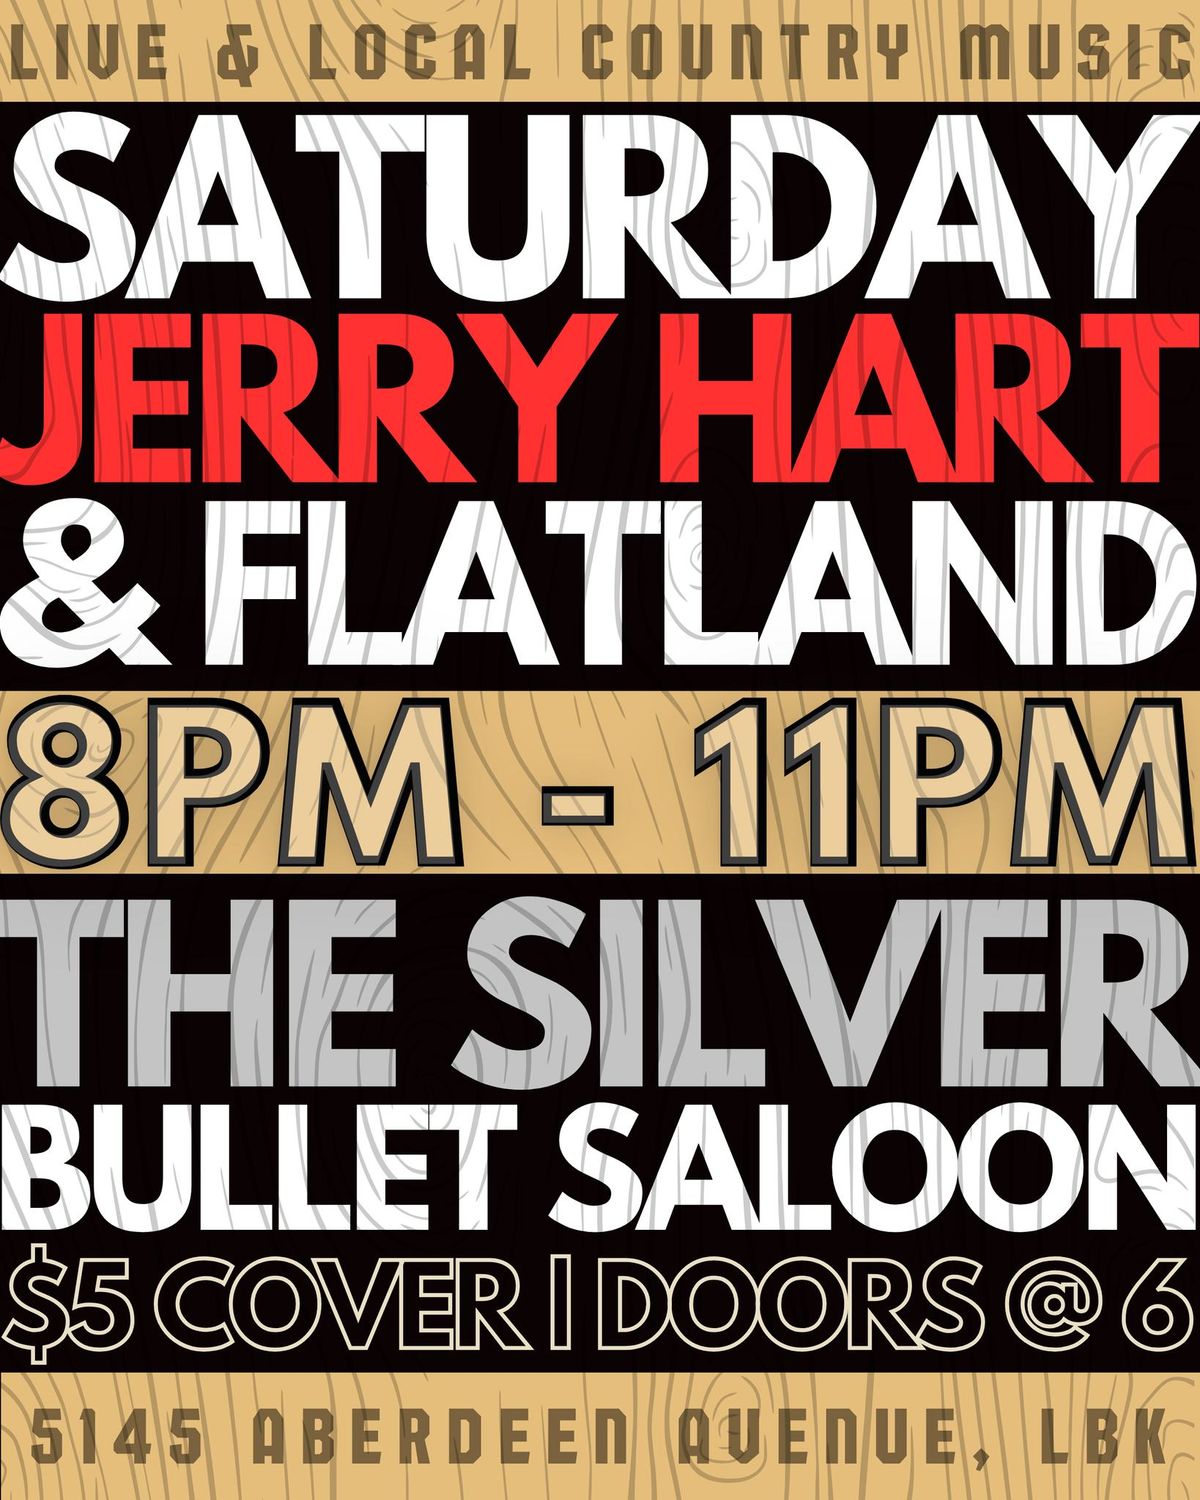 Jerry Hart & Flatland Saturday @ The Saloon!